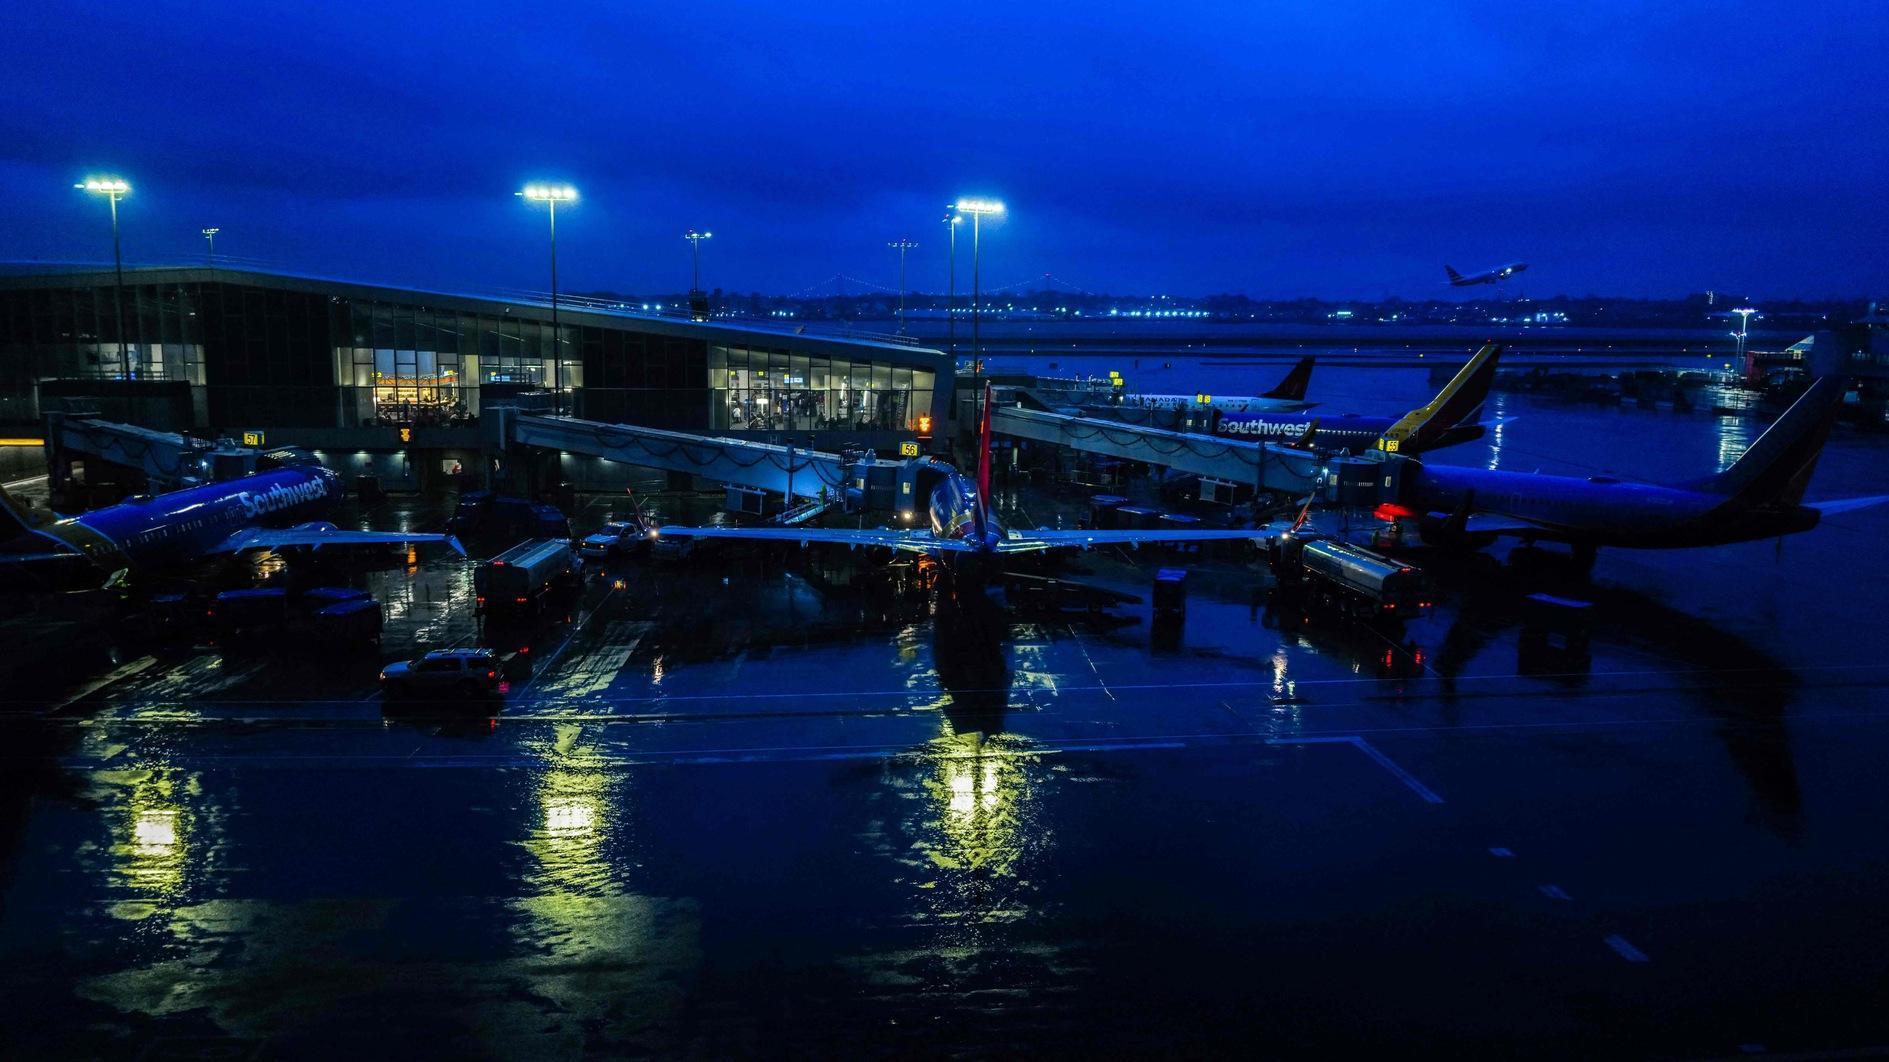 Boeing CEO: Alaska Airlines incident onze fout, belooft transparantie